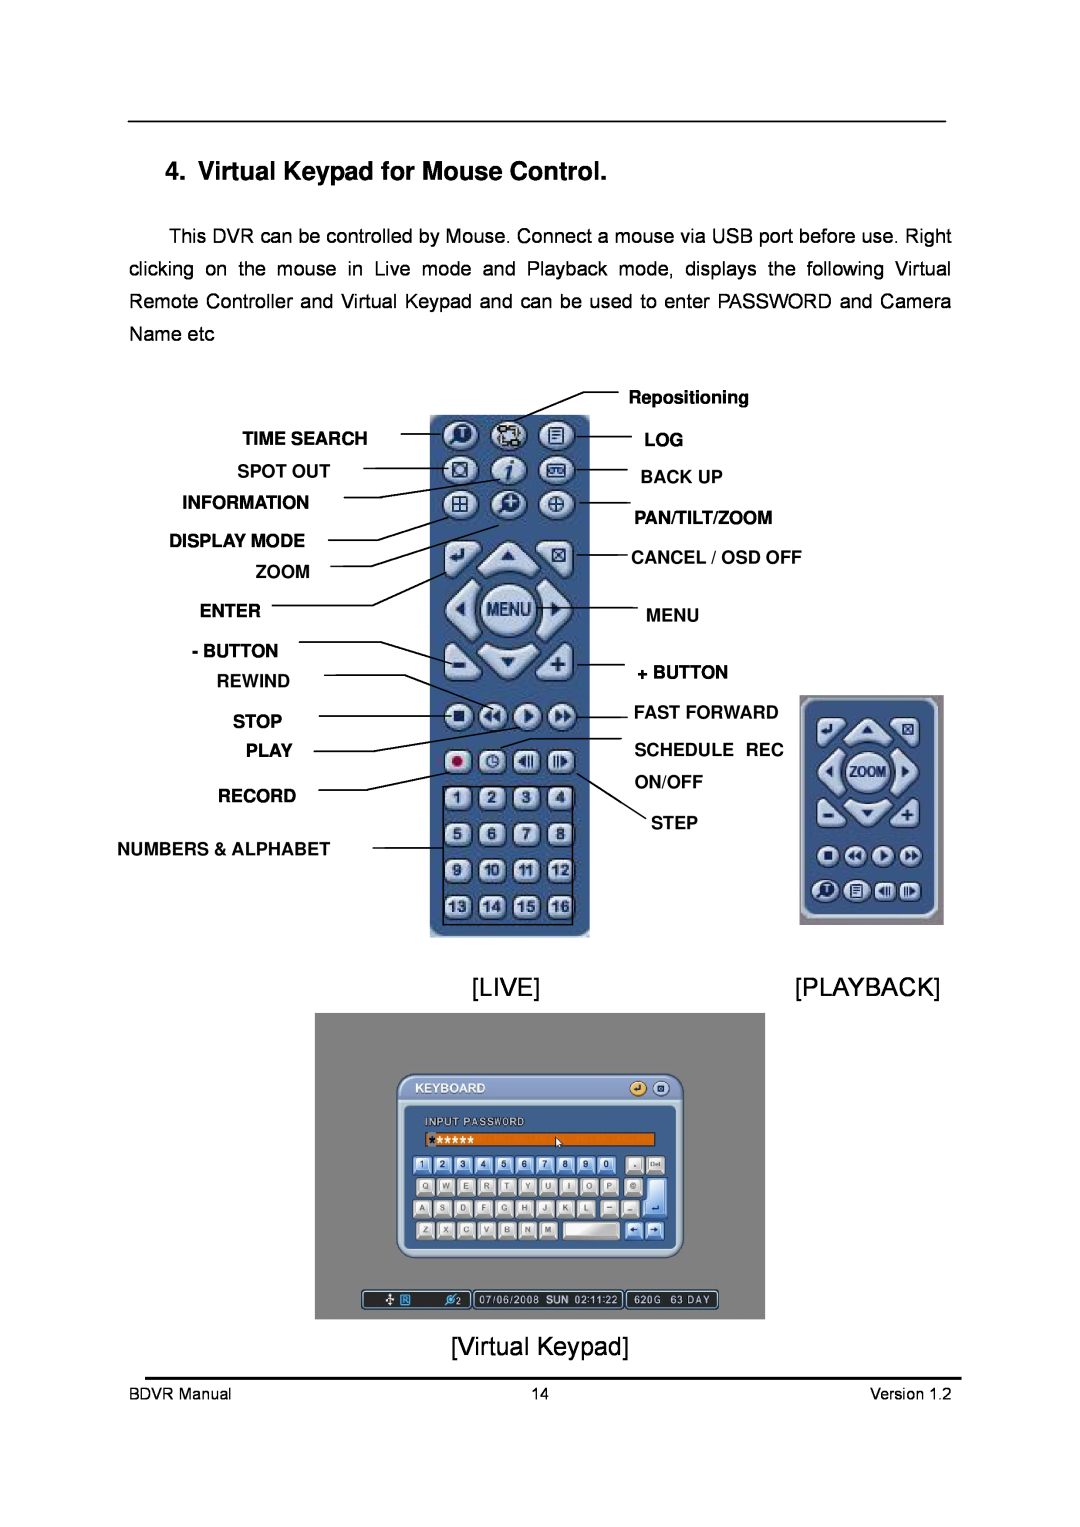 Genie BDVR-8, BDVR-16, BDVR-4 manual Virtual Keypad for Mouse Control, LIVEPLAYBACK Virtual Keypad 